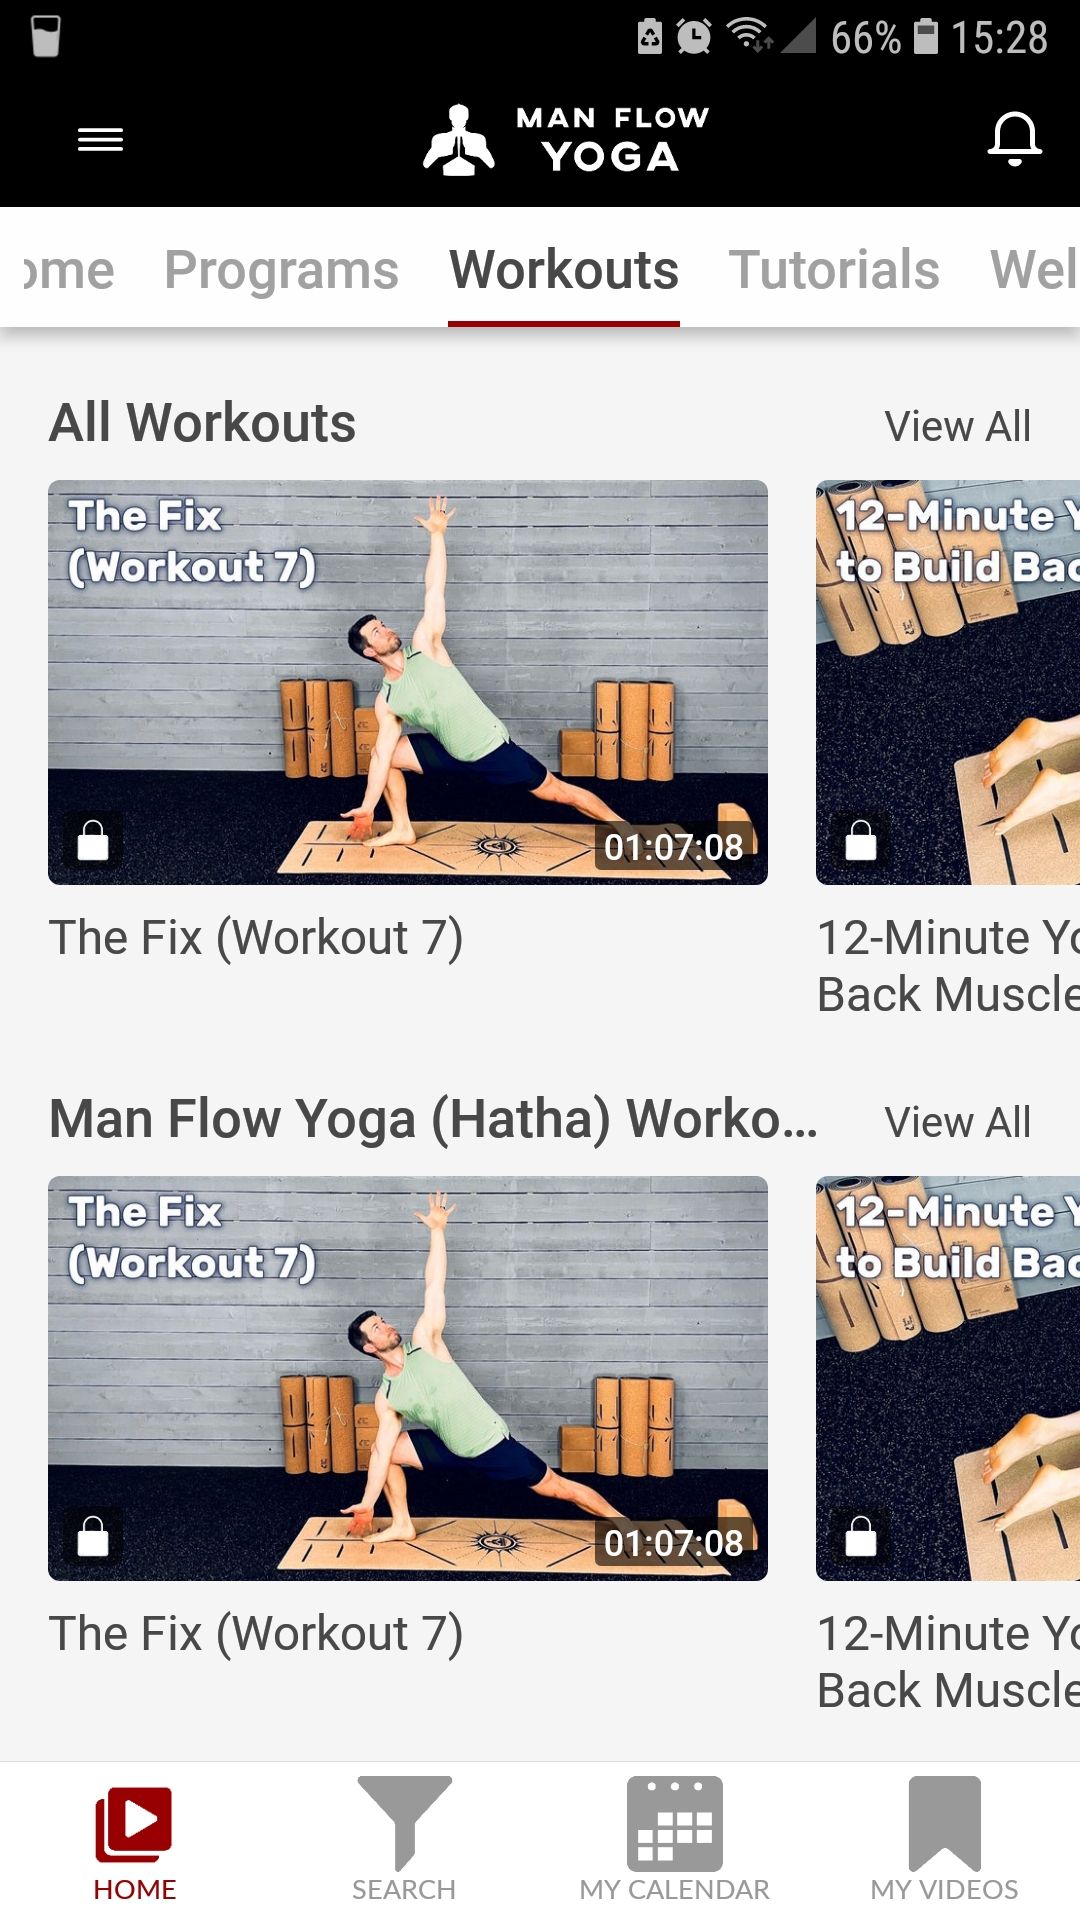 Man Flow Yoga mobile app workouts